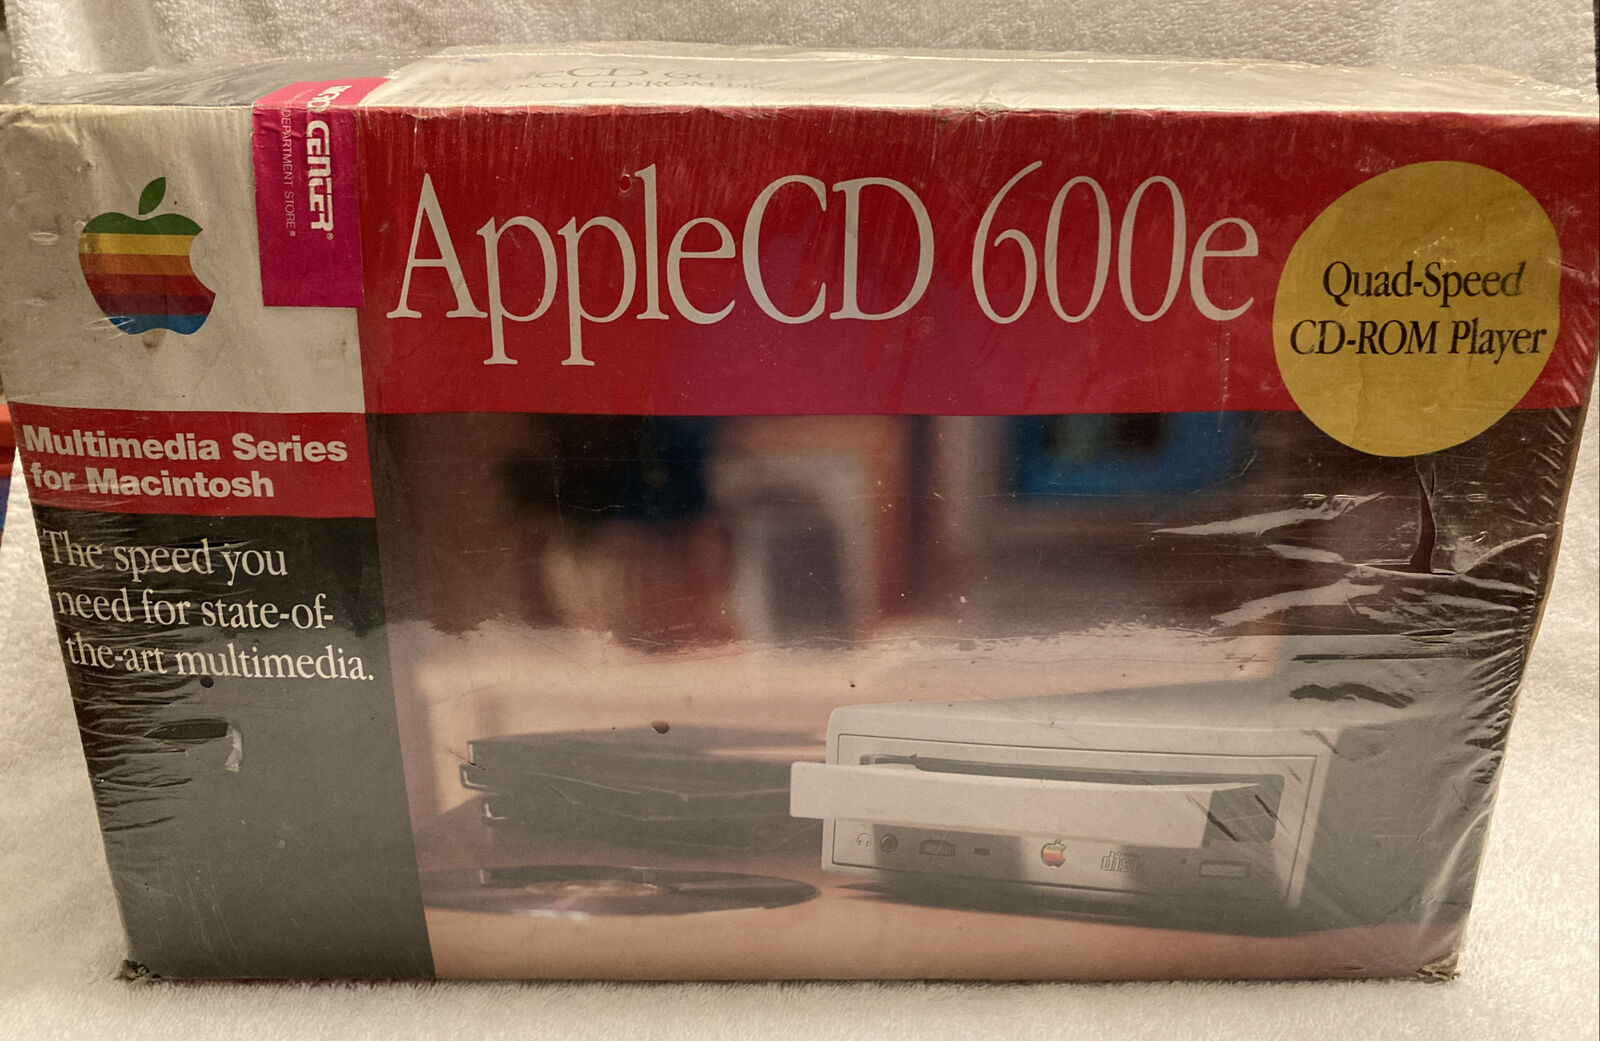 APPLECD 600E EXTERNAL APPLE CD ROM M3958LL/A UNOPENED FACTORY SEALED 1995 Rare